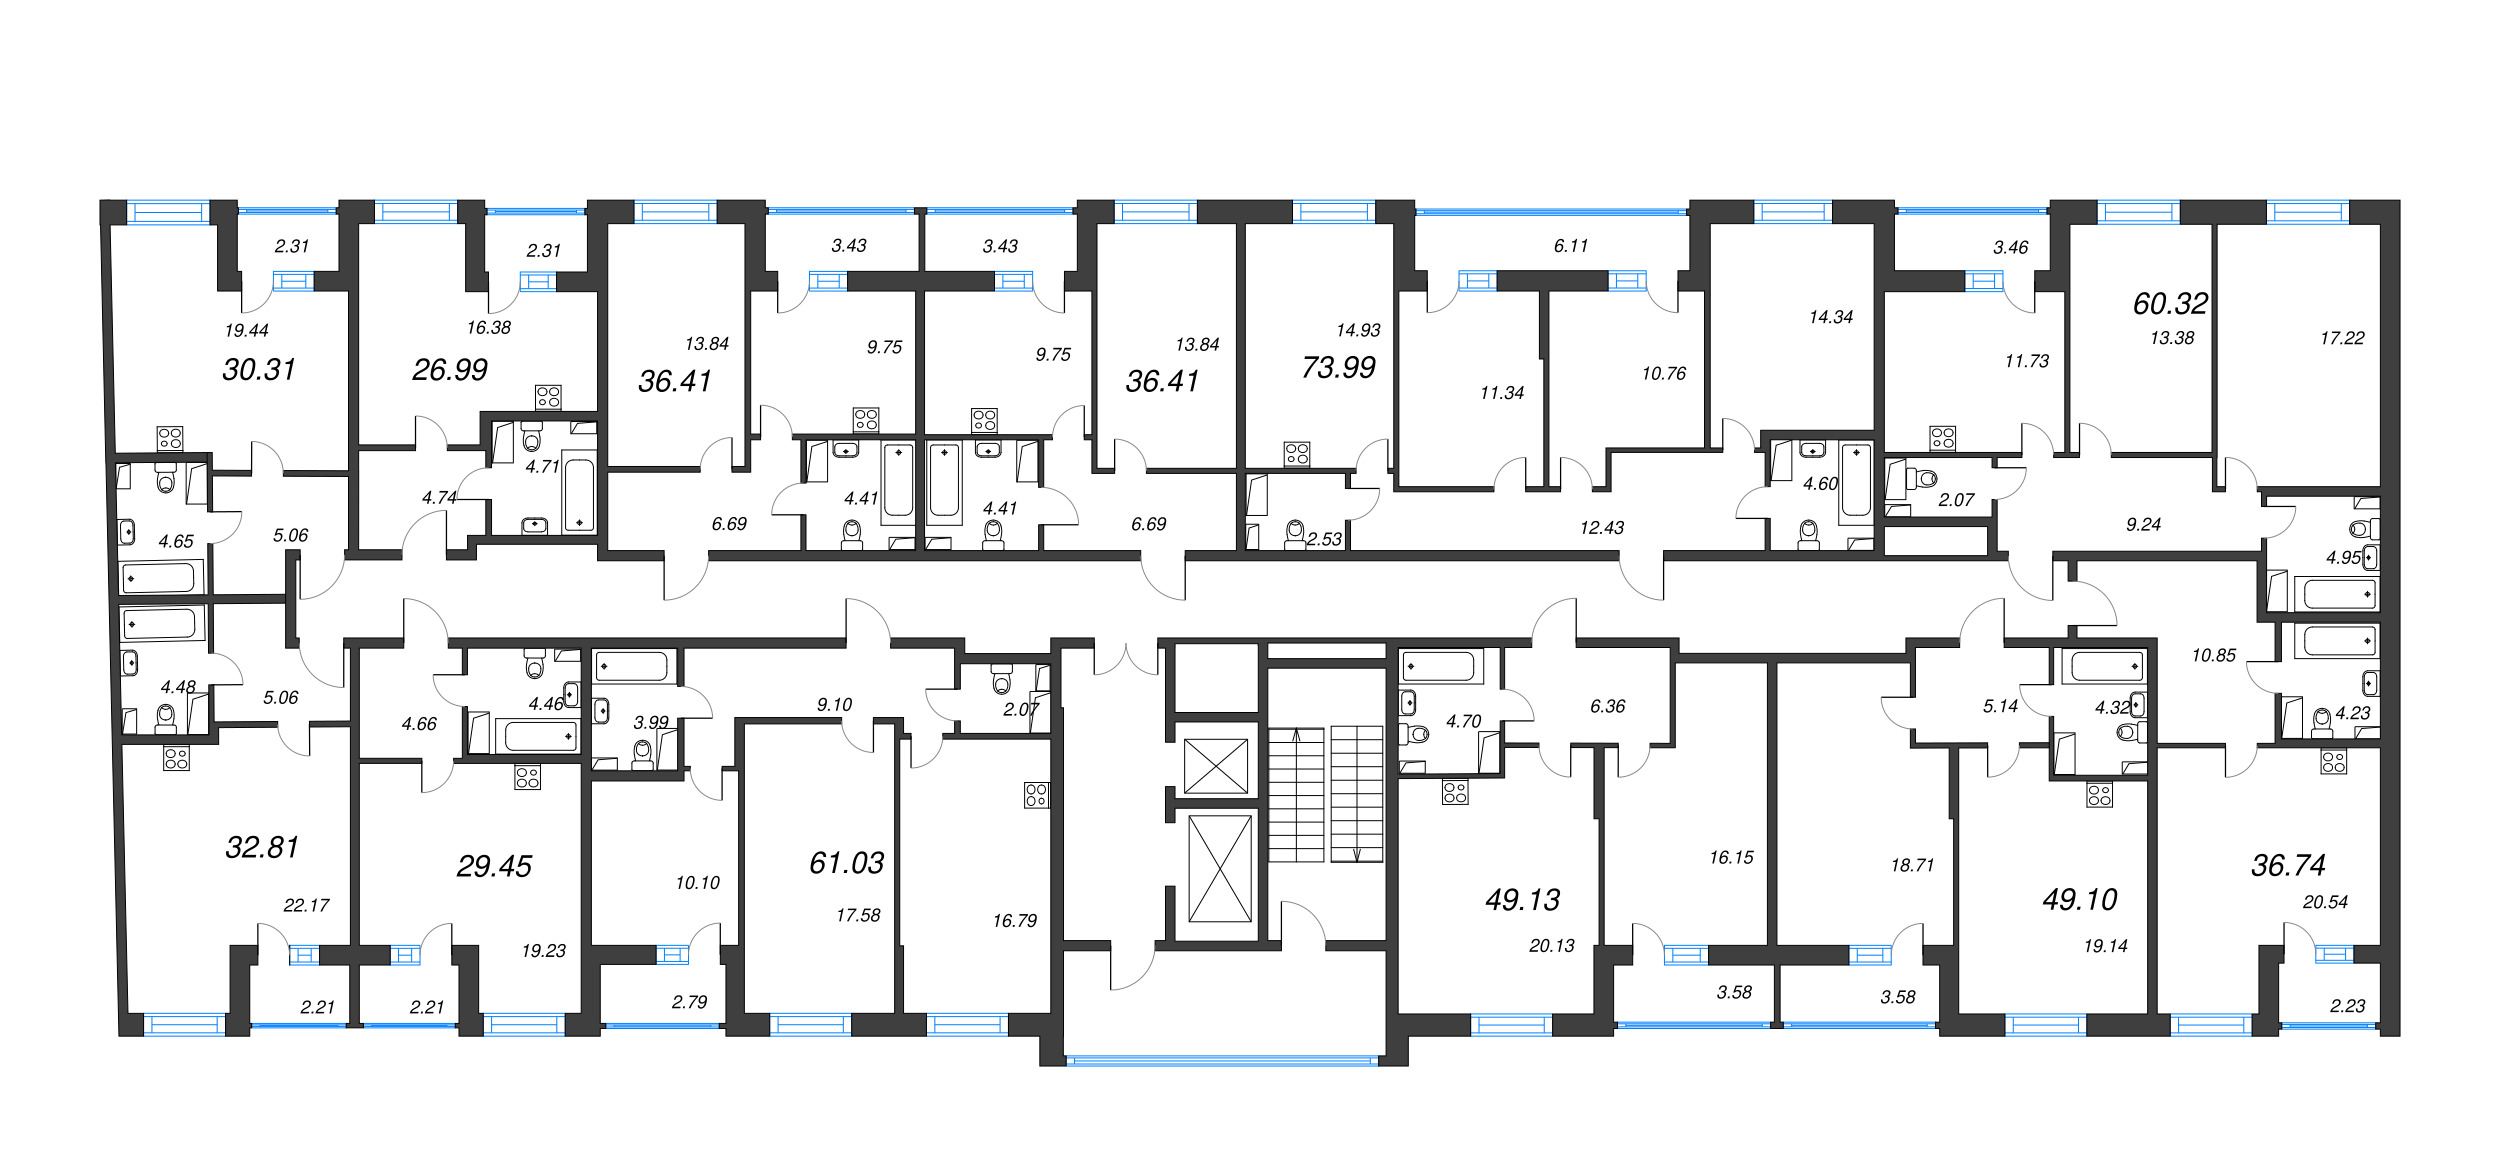 3-комнатная (Евро) квартира, 61.03 м² - планировка этажа